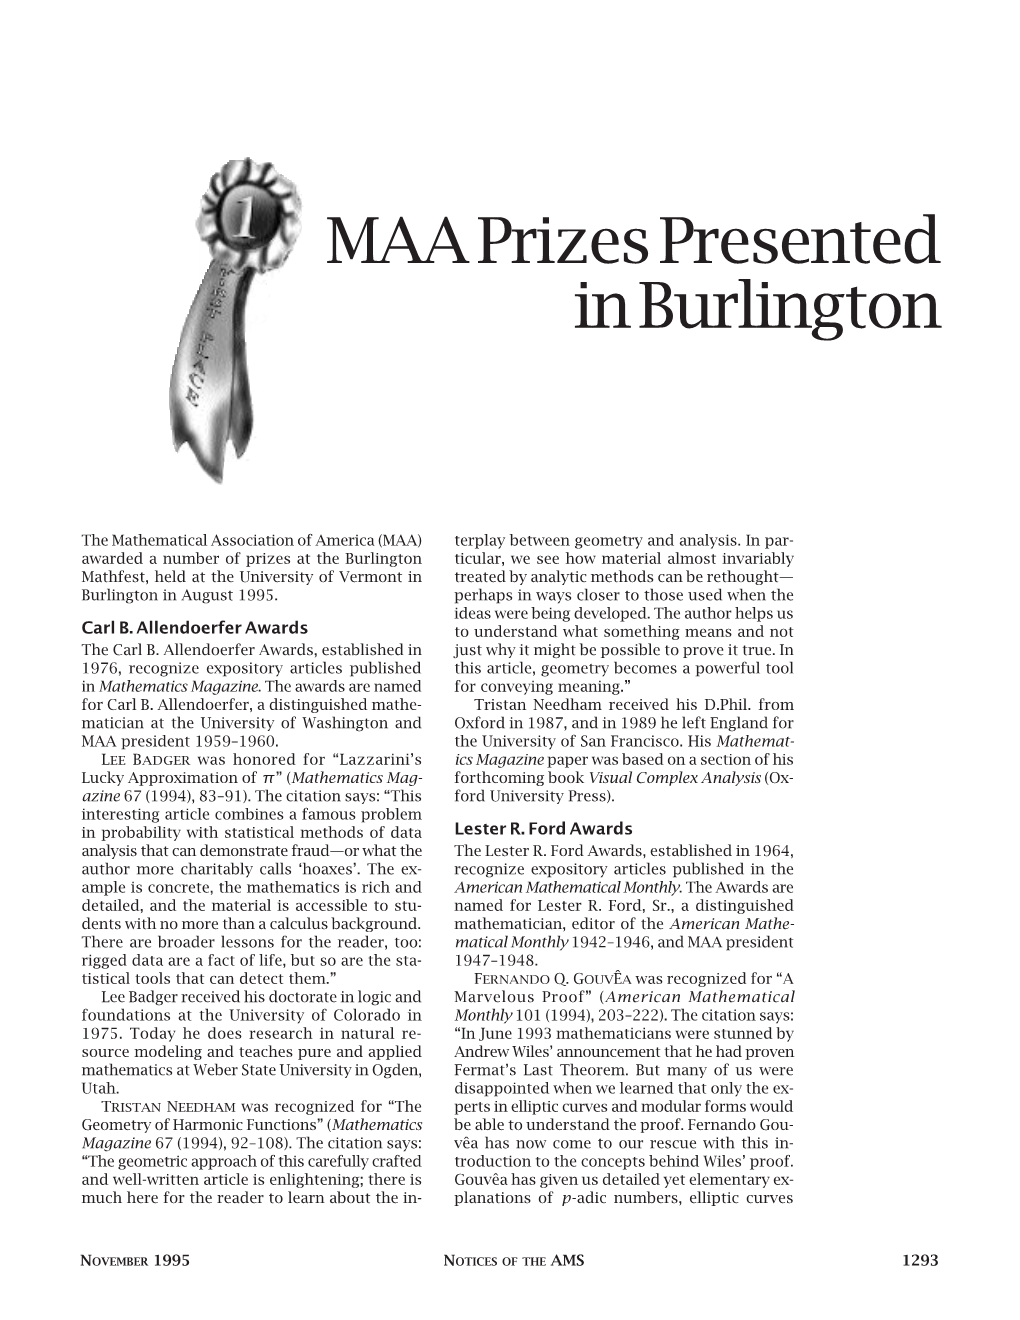 MAA Prizes Presented in Burlington